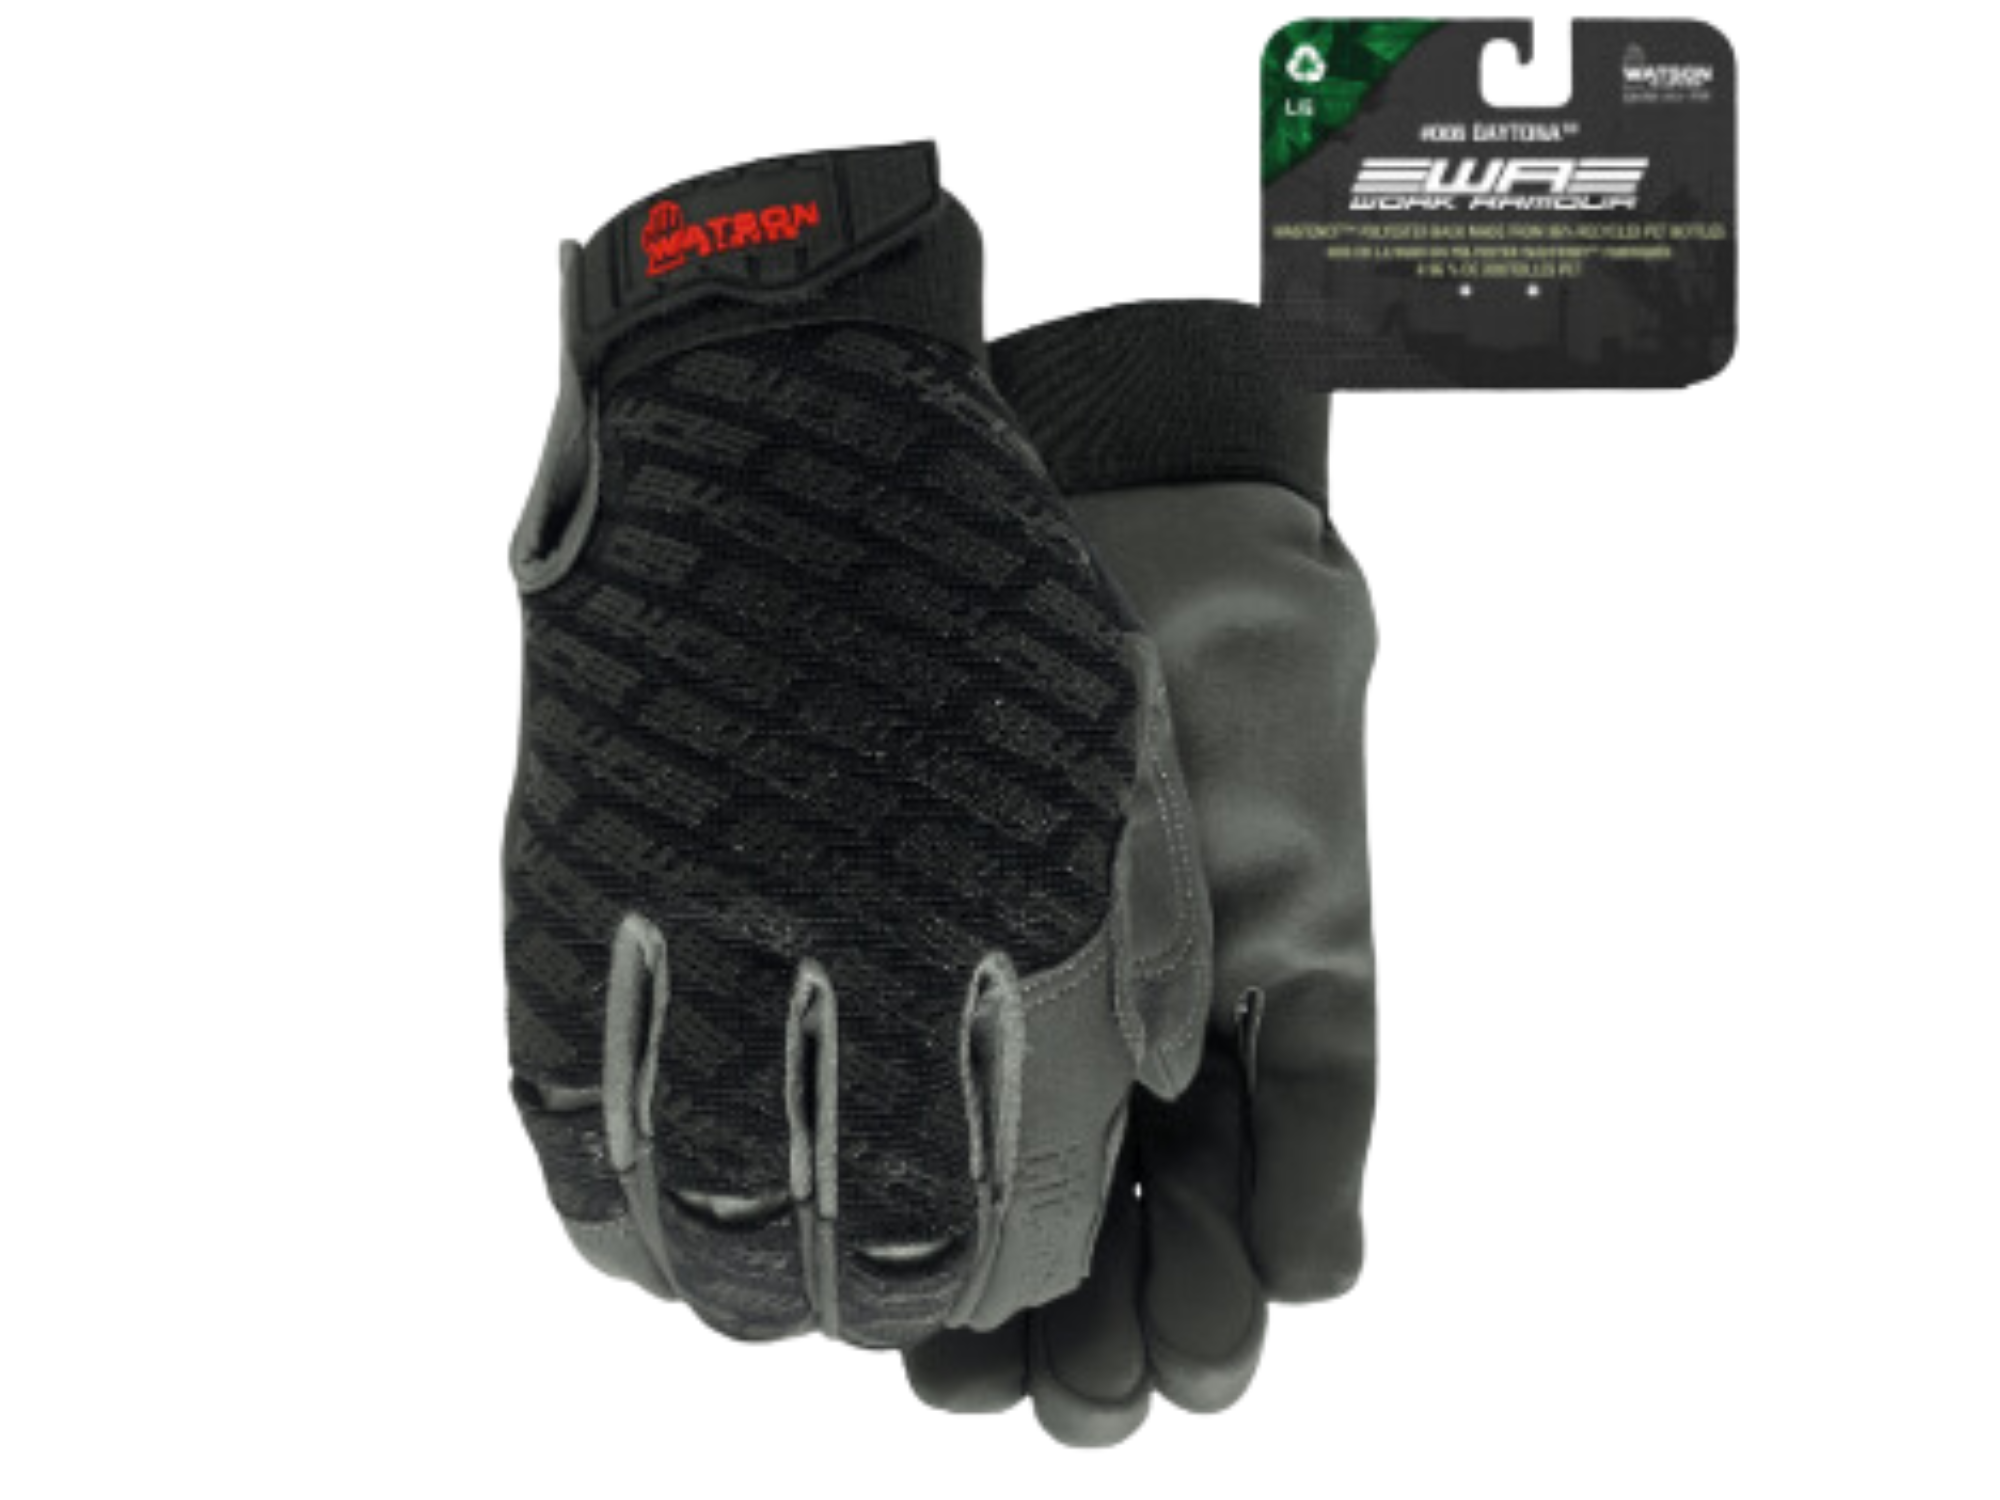 Watson Gloves Daytona Mechanics Glove